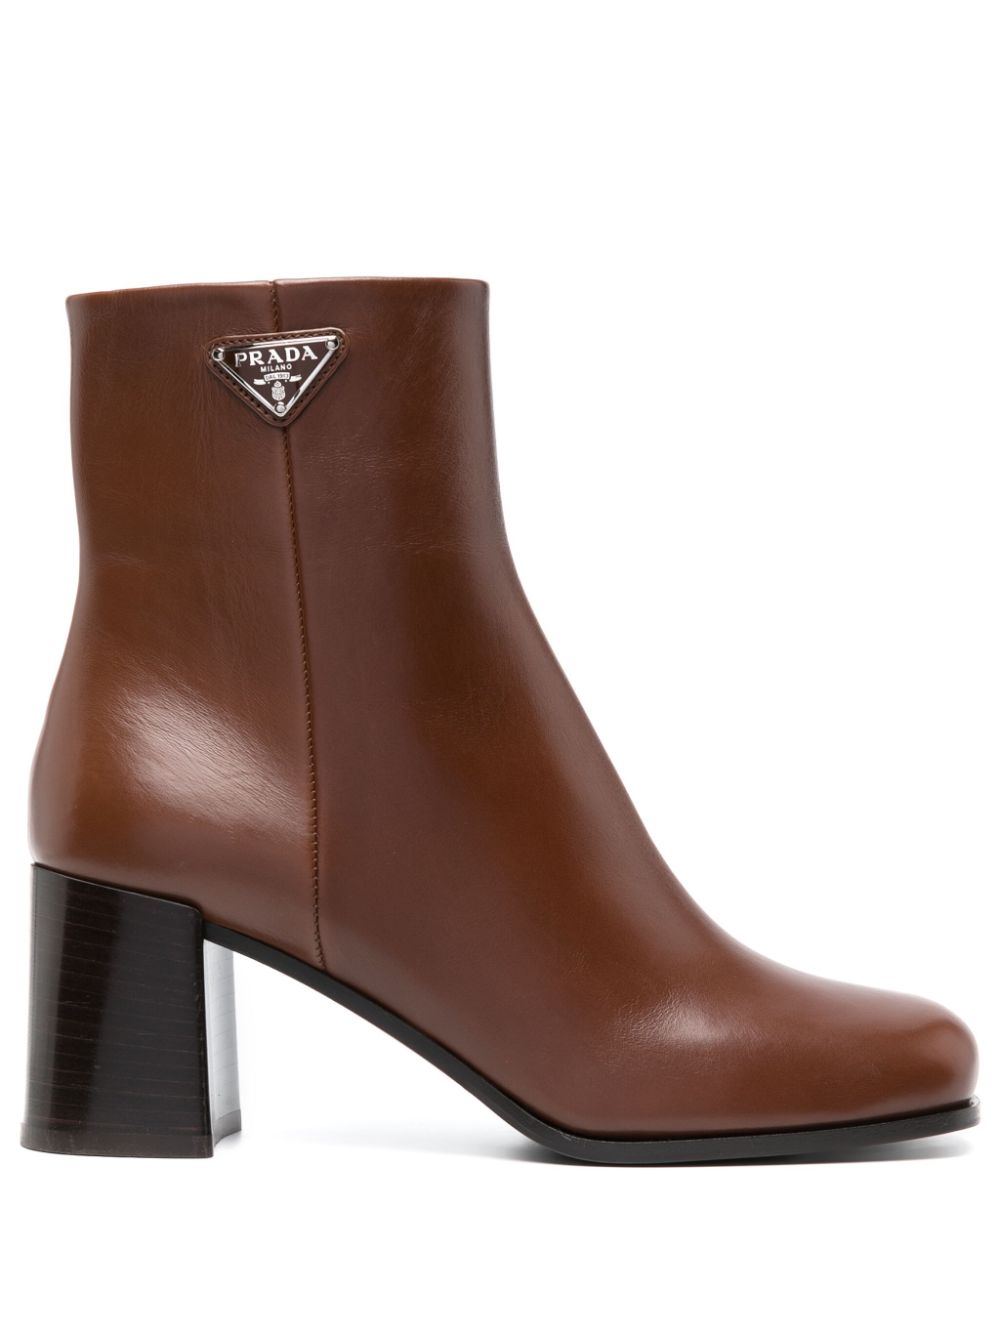 Prada triangle-logo leather boots - Brown